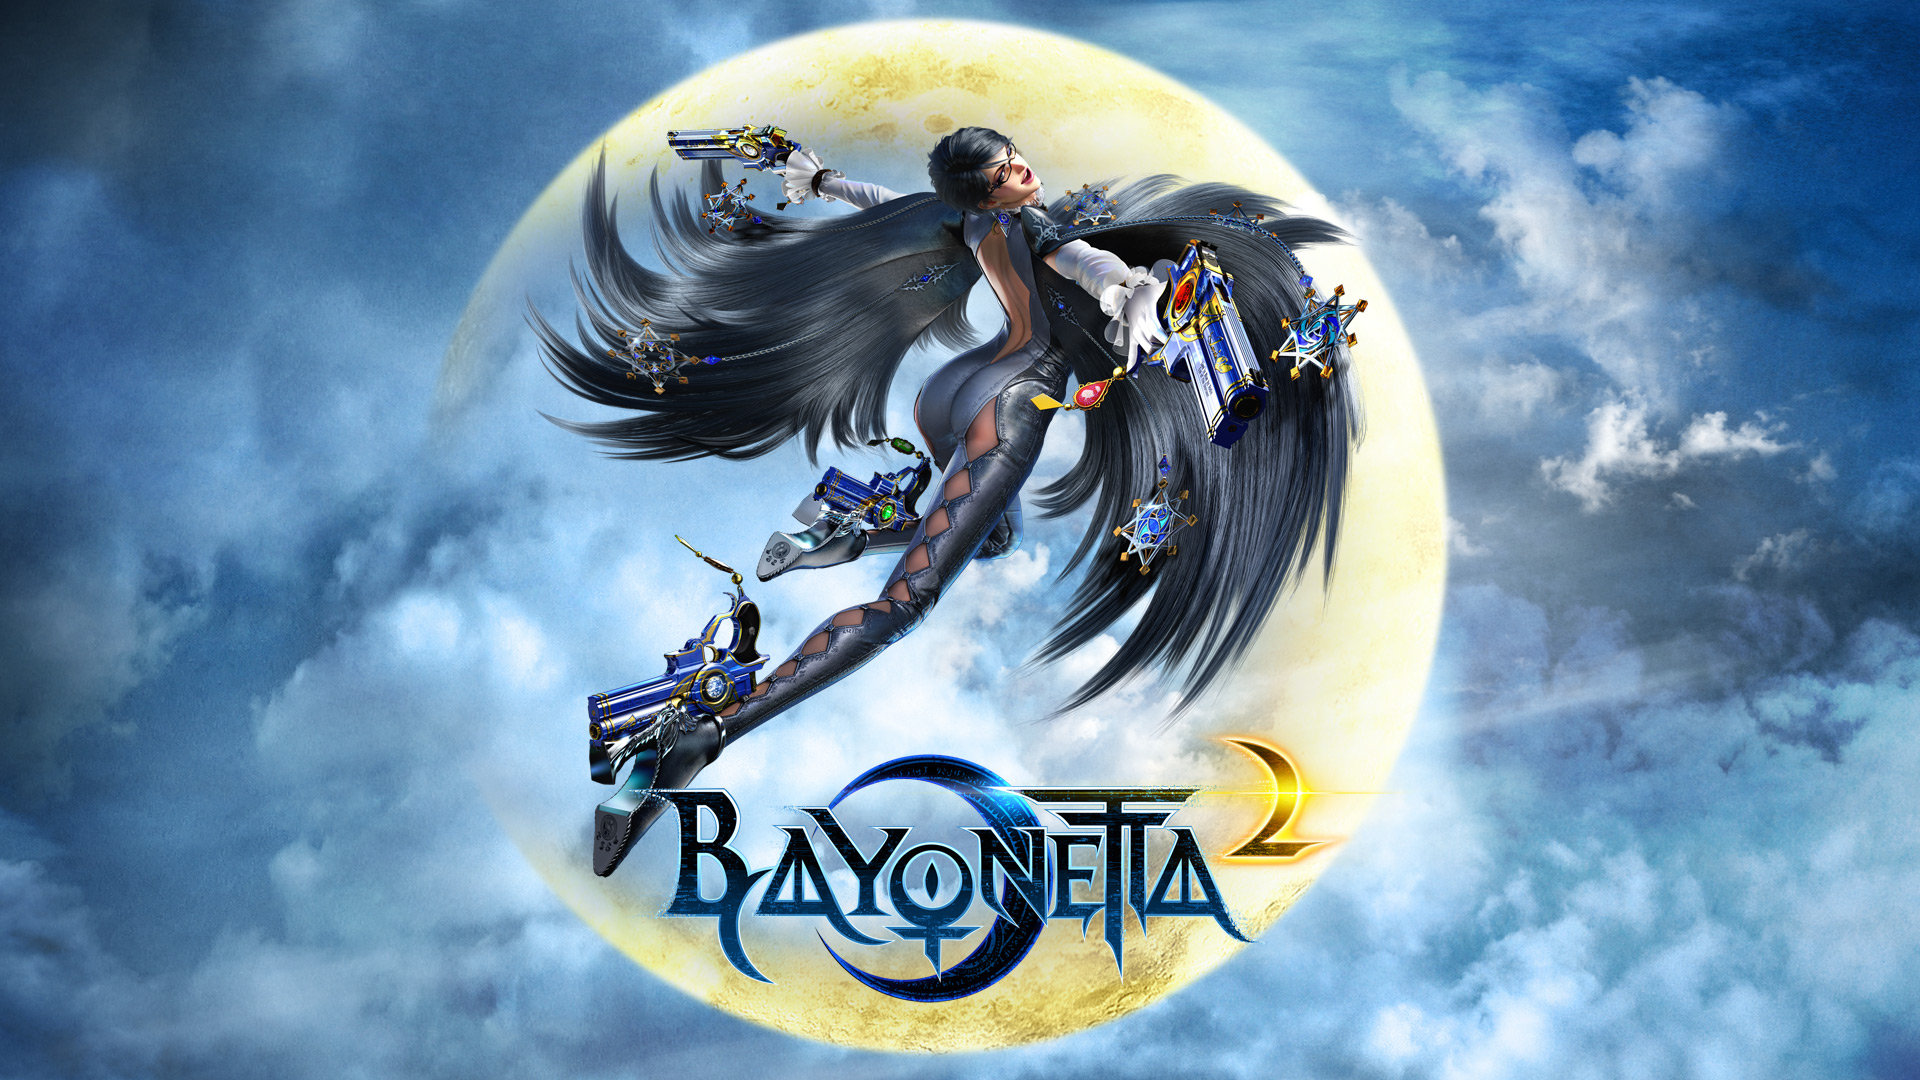 General 1920x1080 Bayonetta 2 Bayonetta video game art Moon sky clouds gun crescent moon video game girls girls with guns